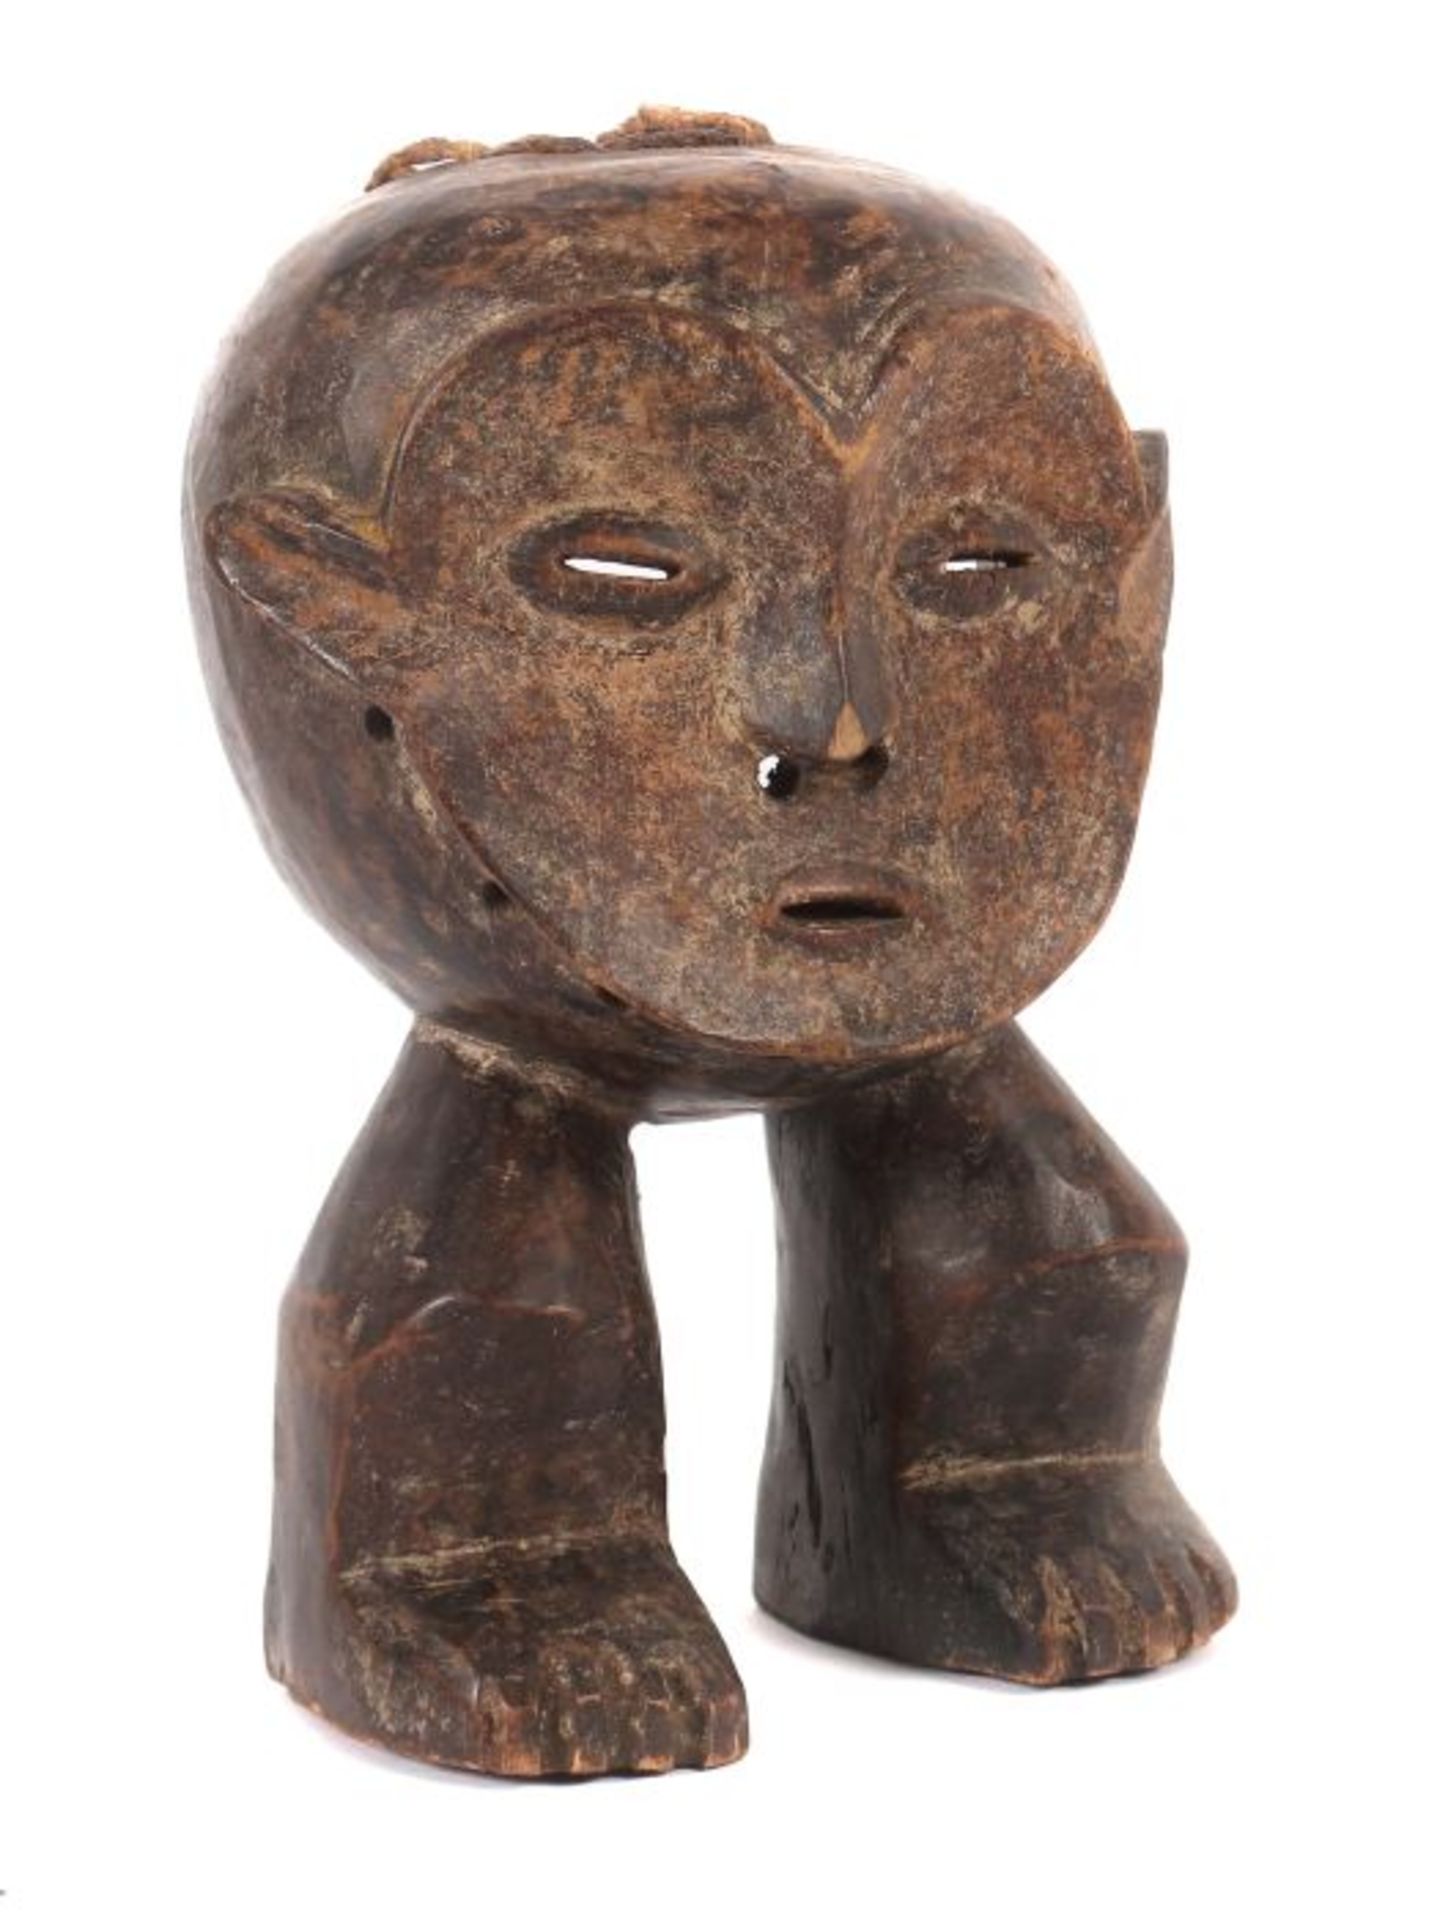 Kopffigur der LegaDR Kongo, Holz, geschwärzt, H: 24 cm.- - -25.00 % buyer's premium on the hammer